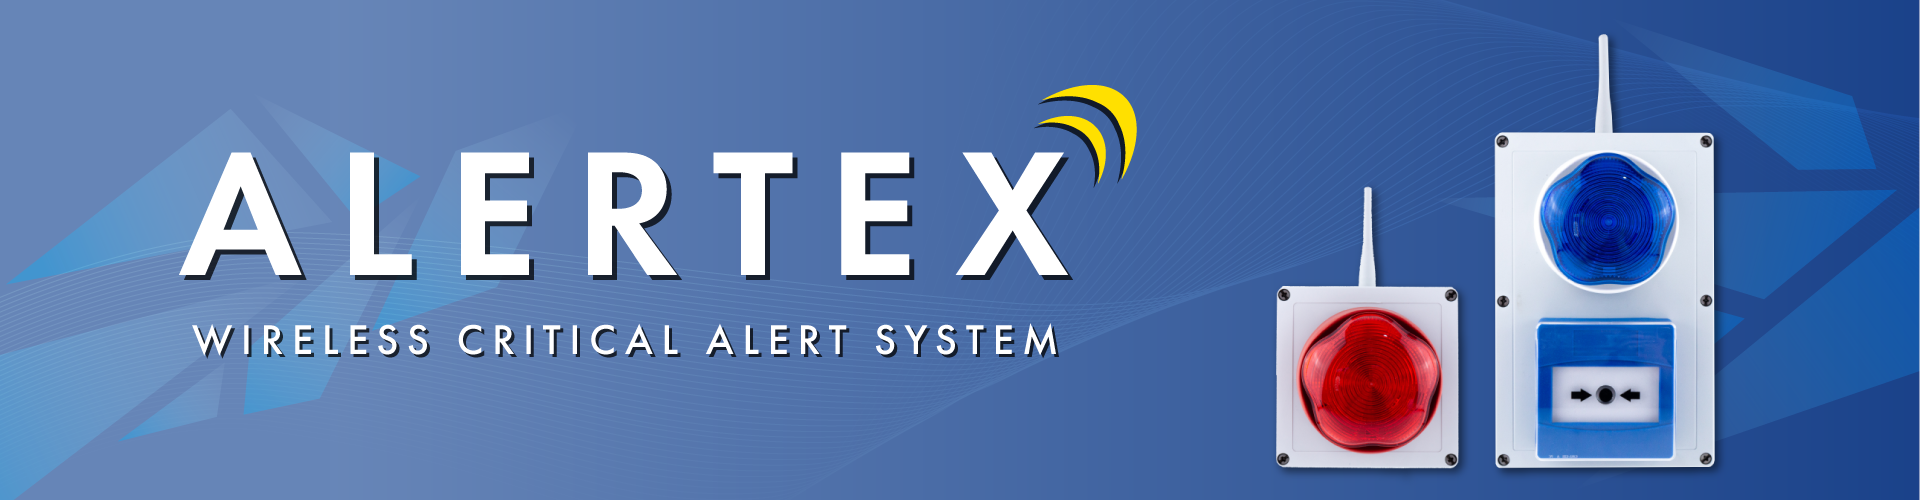 alertex-web-banner